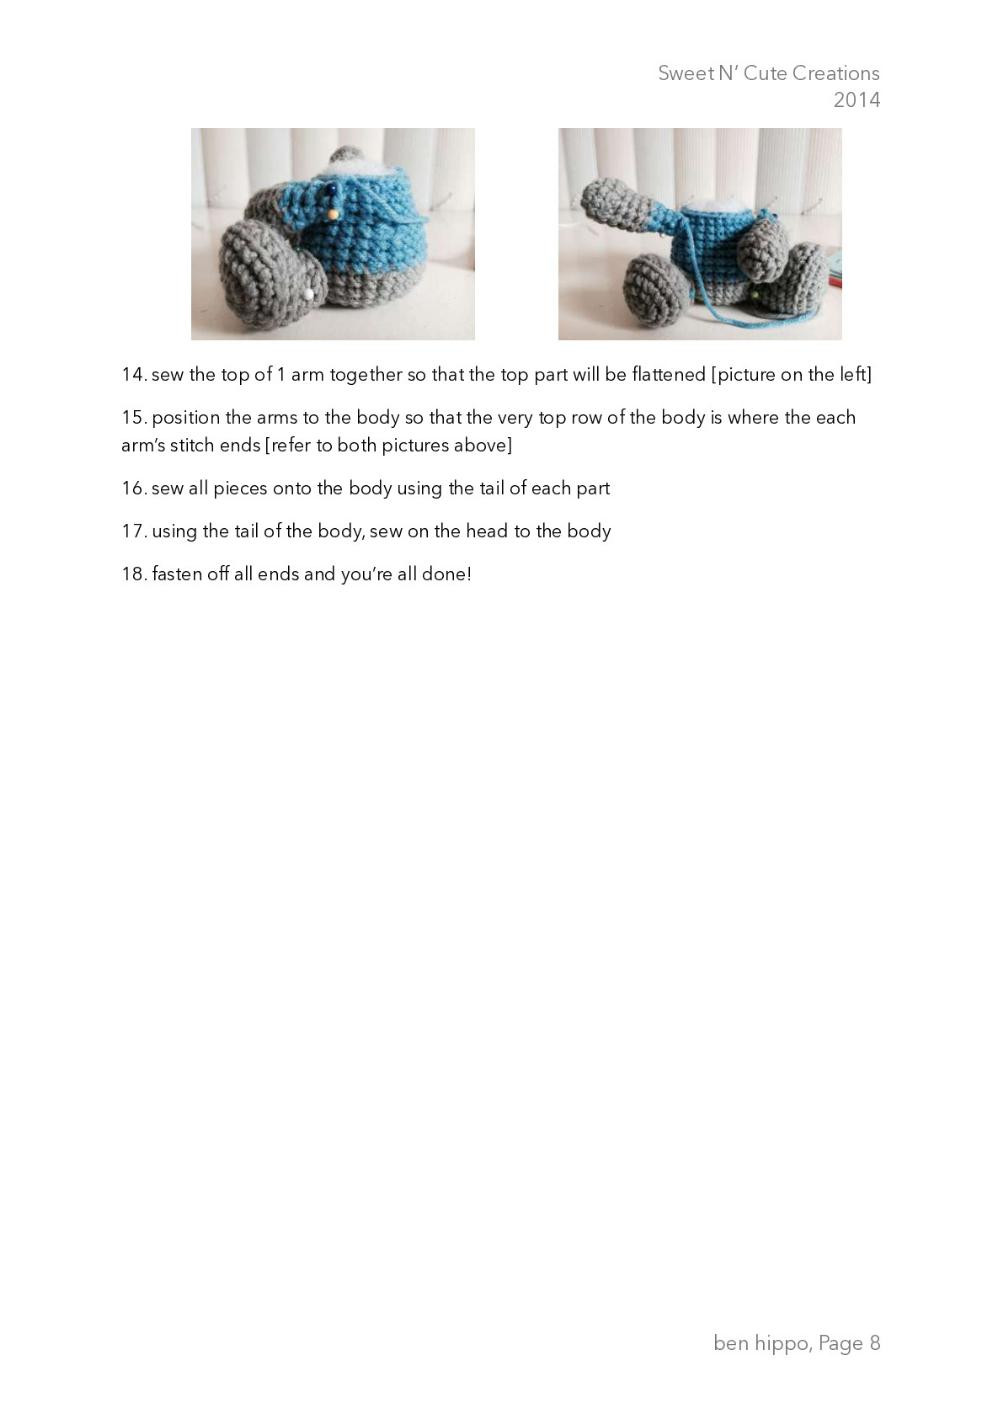 Ben Hippo amigurumi crochet pattern